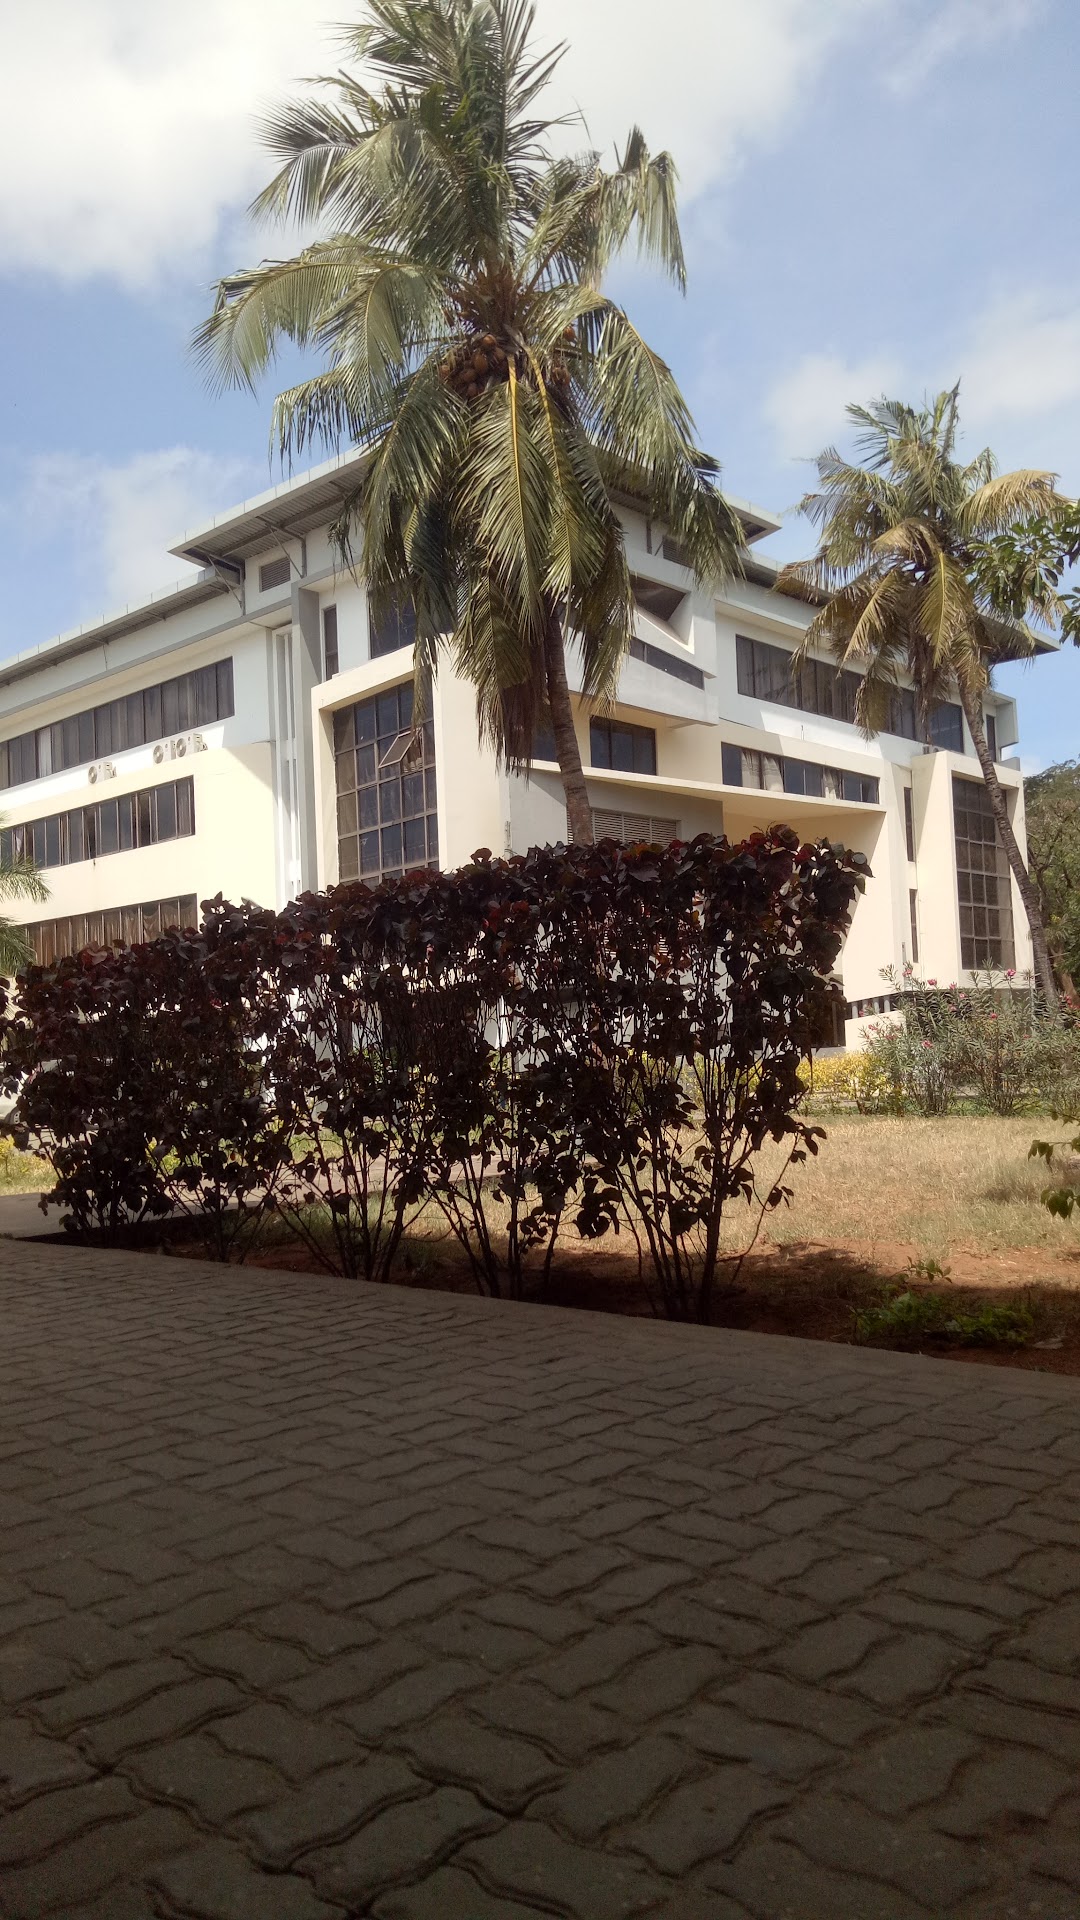 Dar es Salaam University College of Education